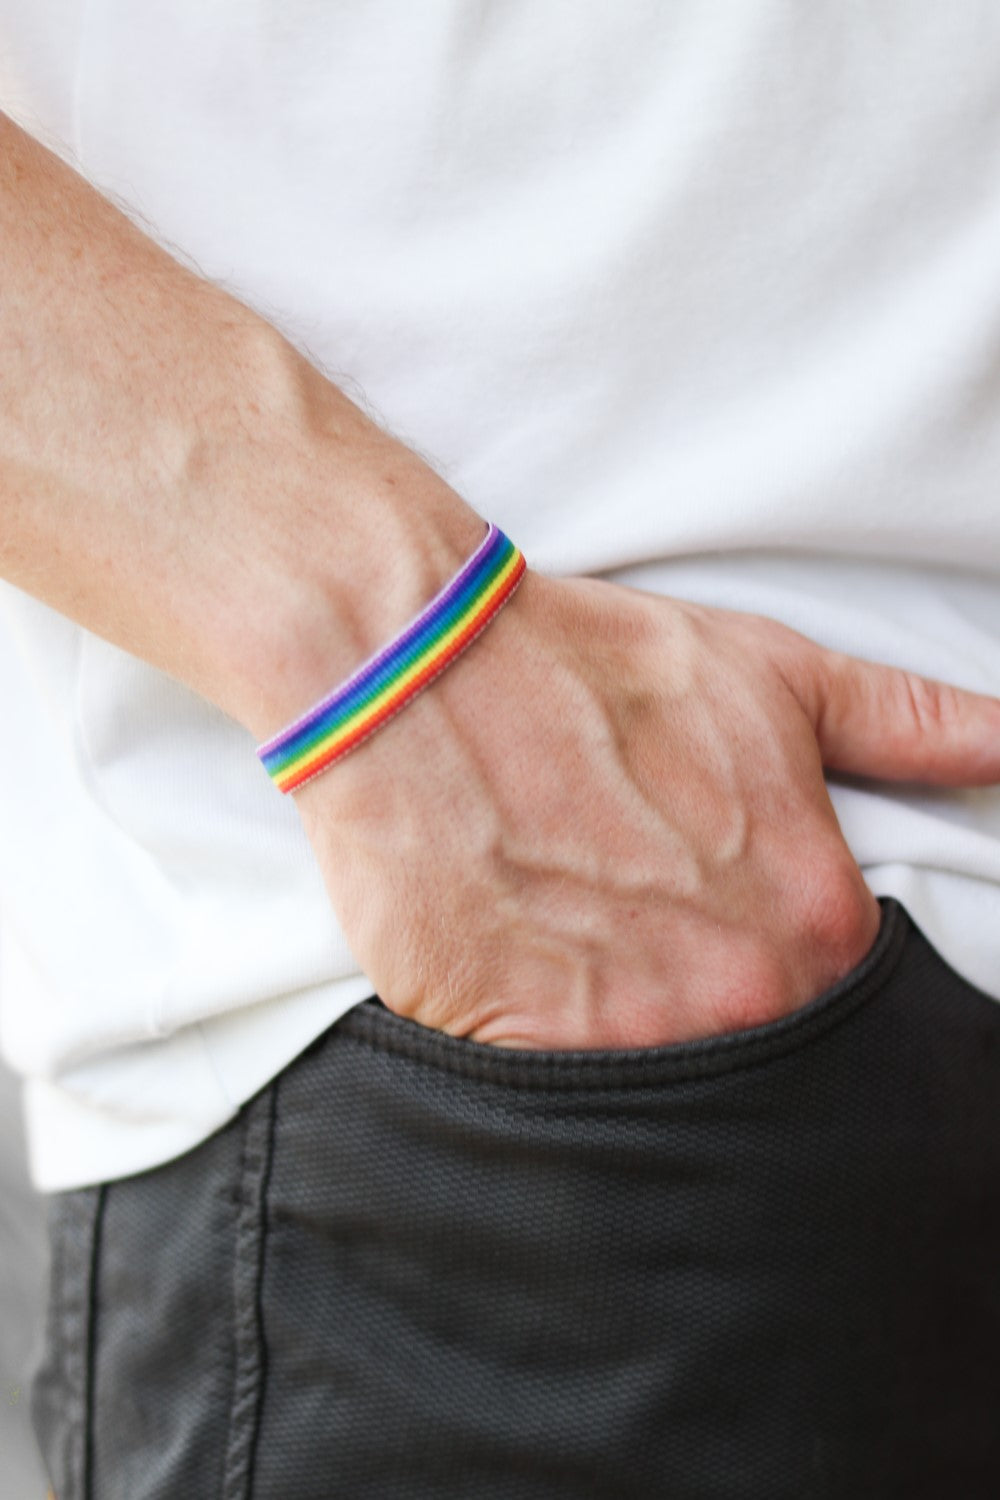 LGBTQ+ Pride Fashion Project: How To Make Pride Bracelets - YouTube